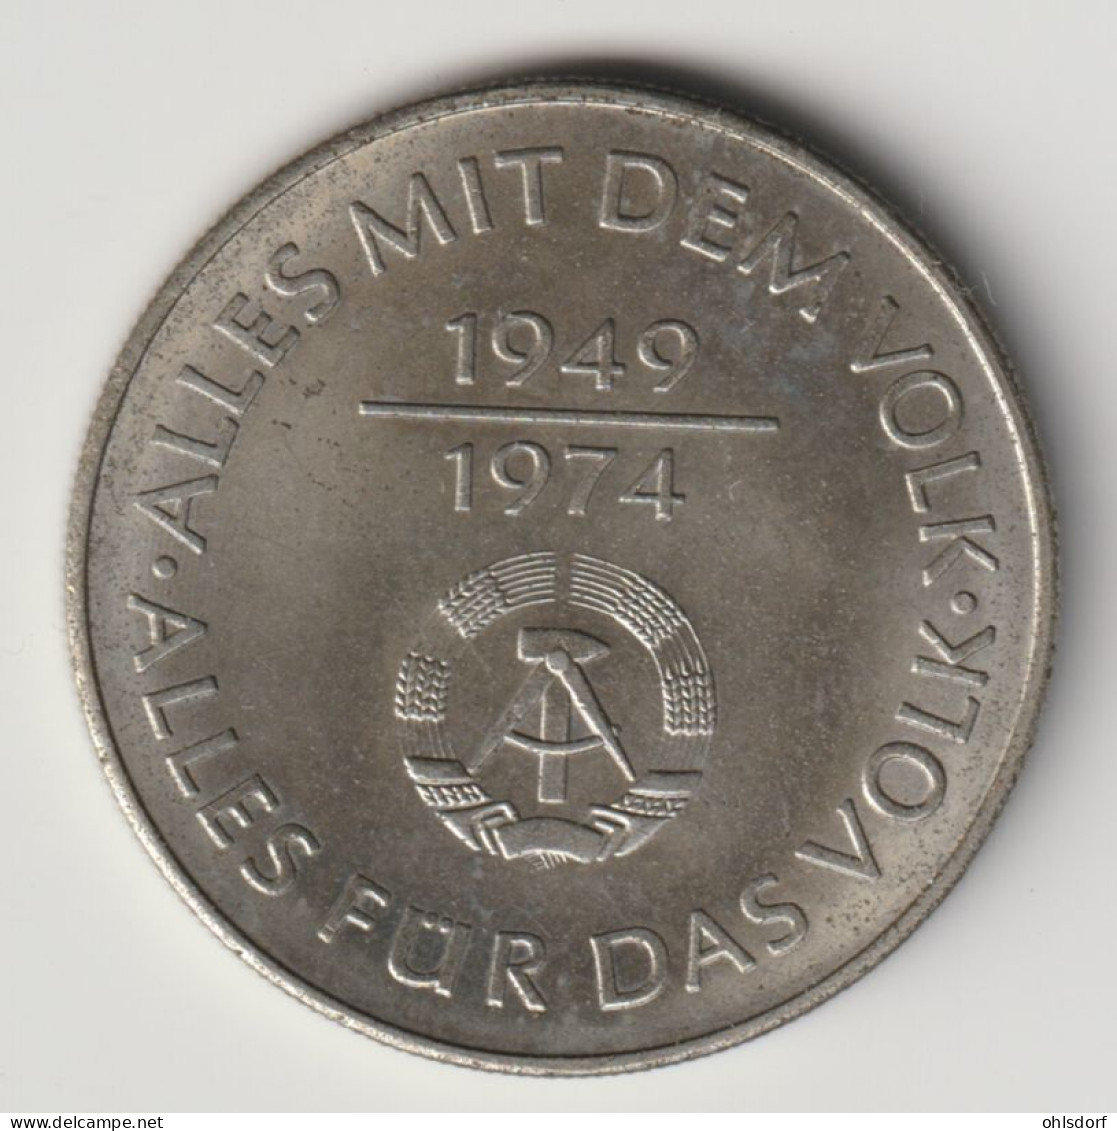 DDR 1974: 10 Mark, 25 Jahre, KM 50 - 10 Mark